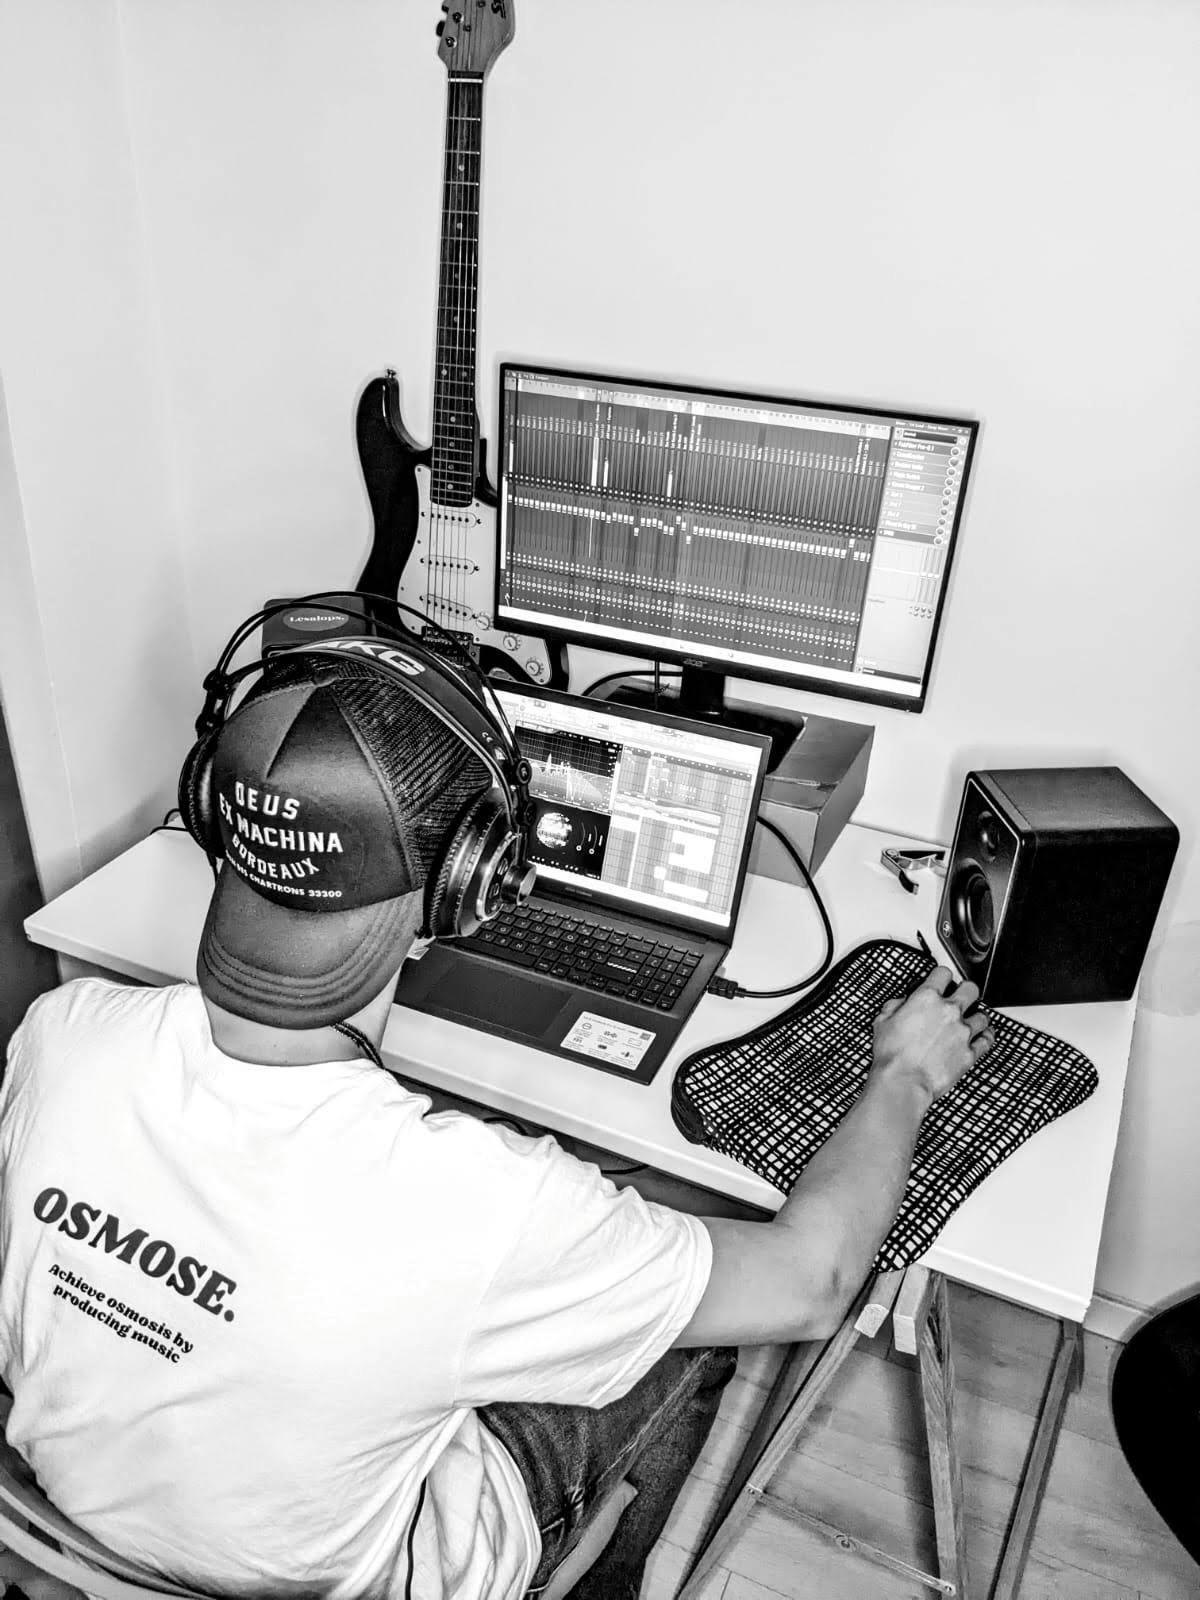 Les studios d'enregistrement du futur à Paris : Beatmaking, DJ